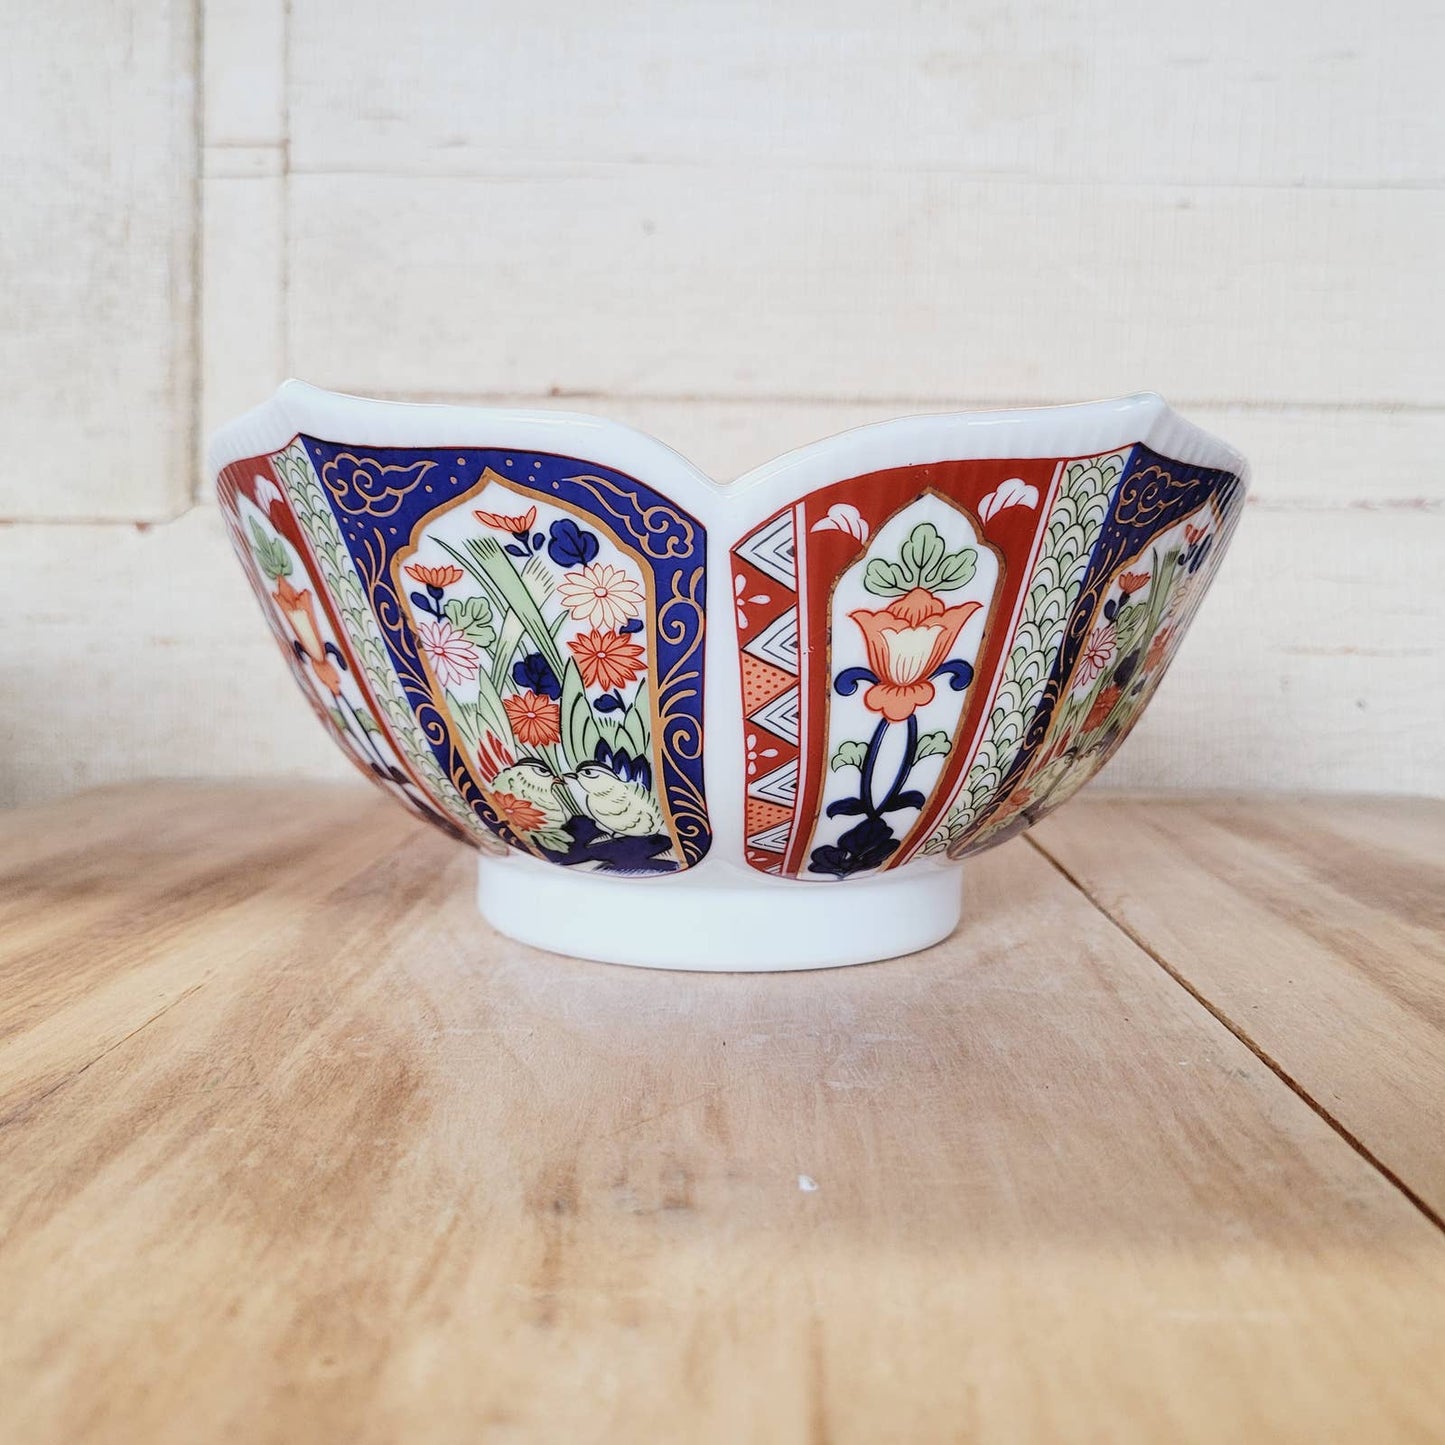 Beautiful Vintage Painted Porcelain Lotus Bowl.